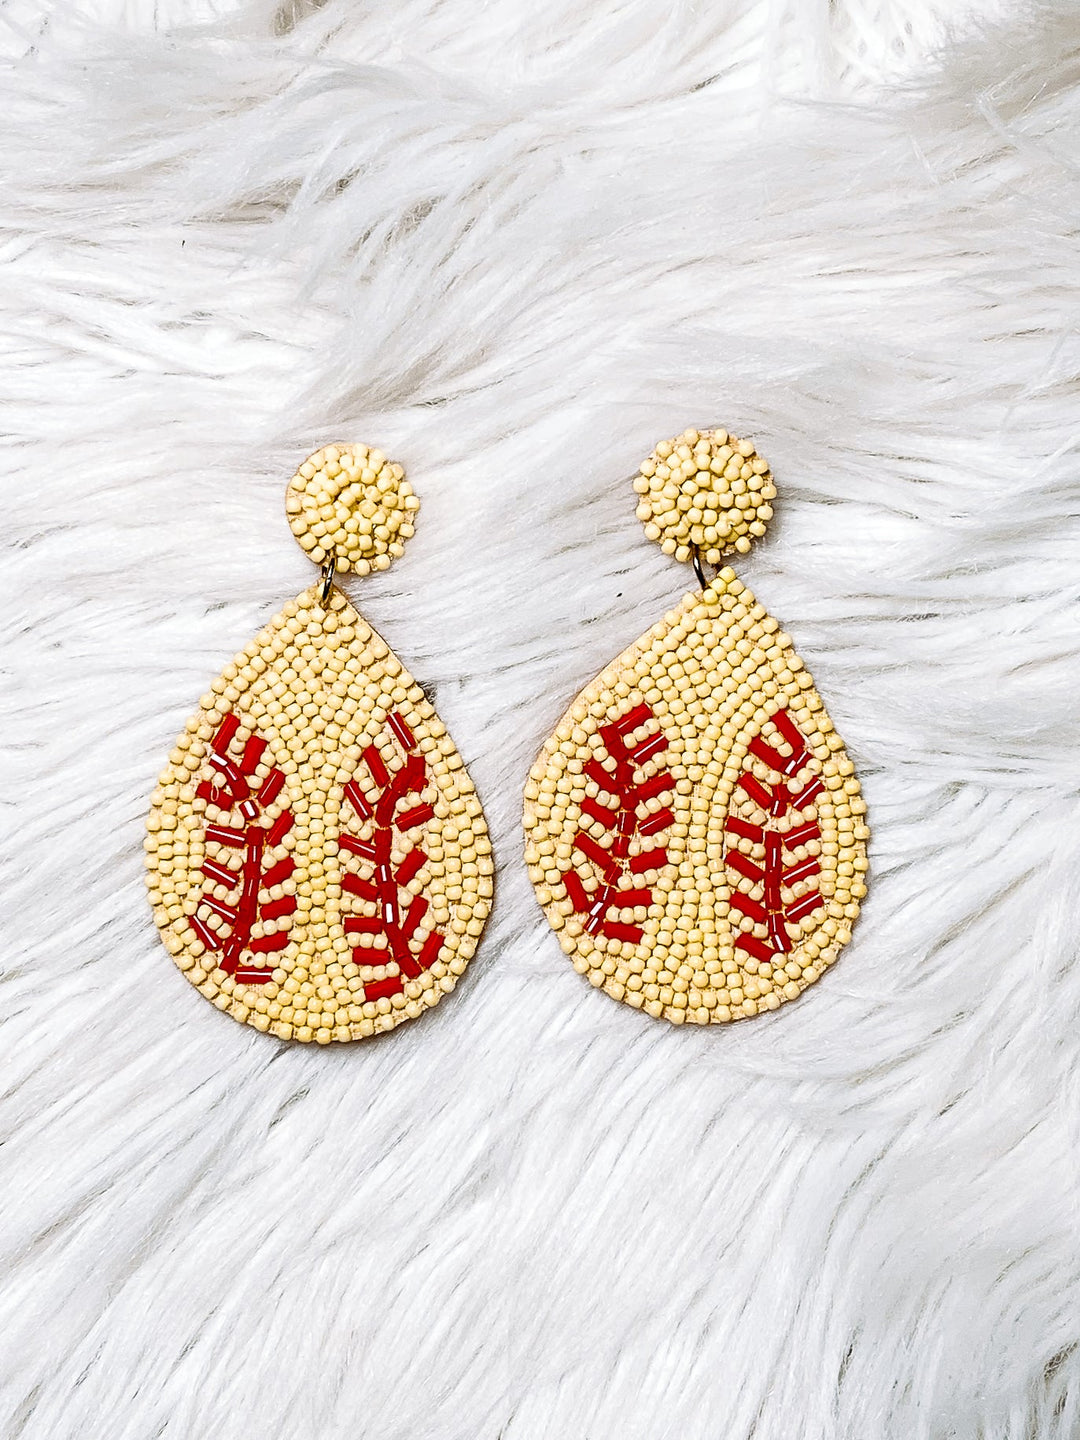 Softball seed bead earrings - Jayden Layne